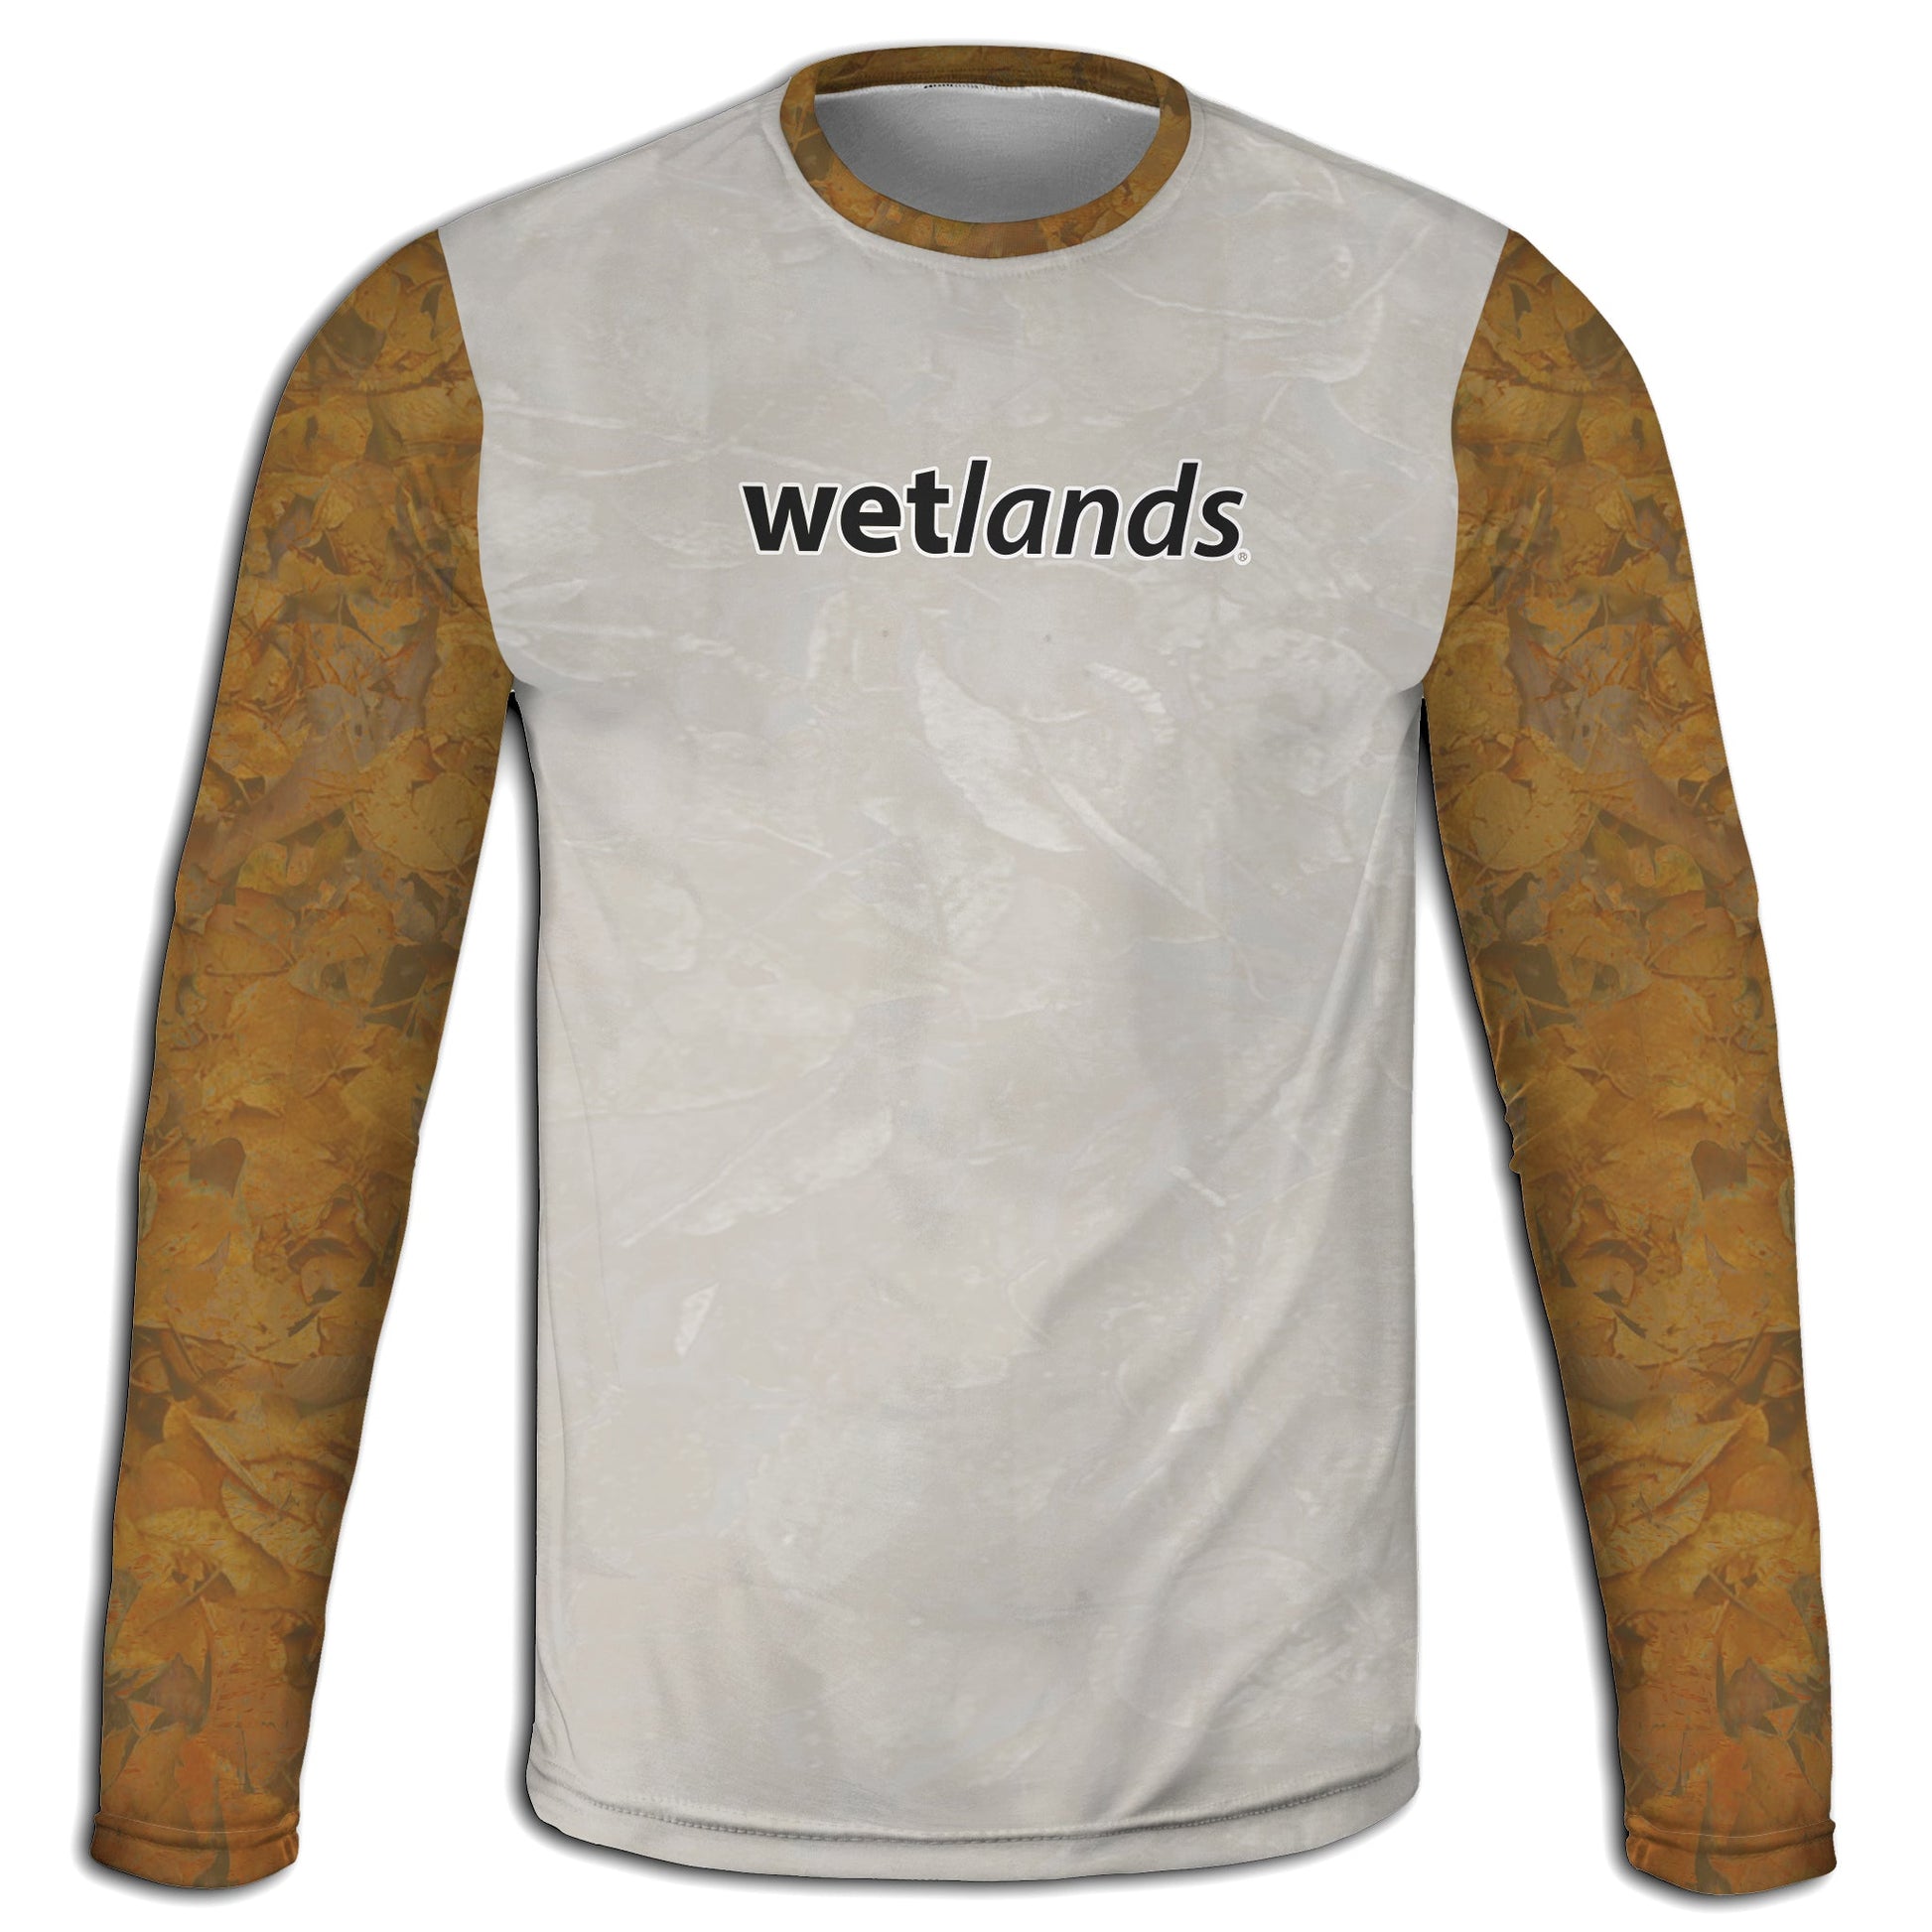 Whitetail Buck Wetlands Performance Apparel